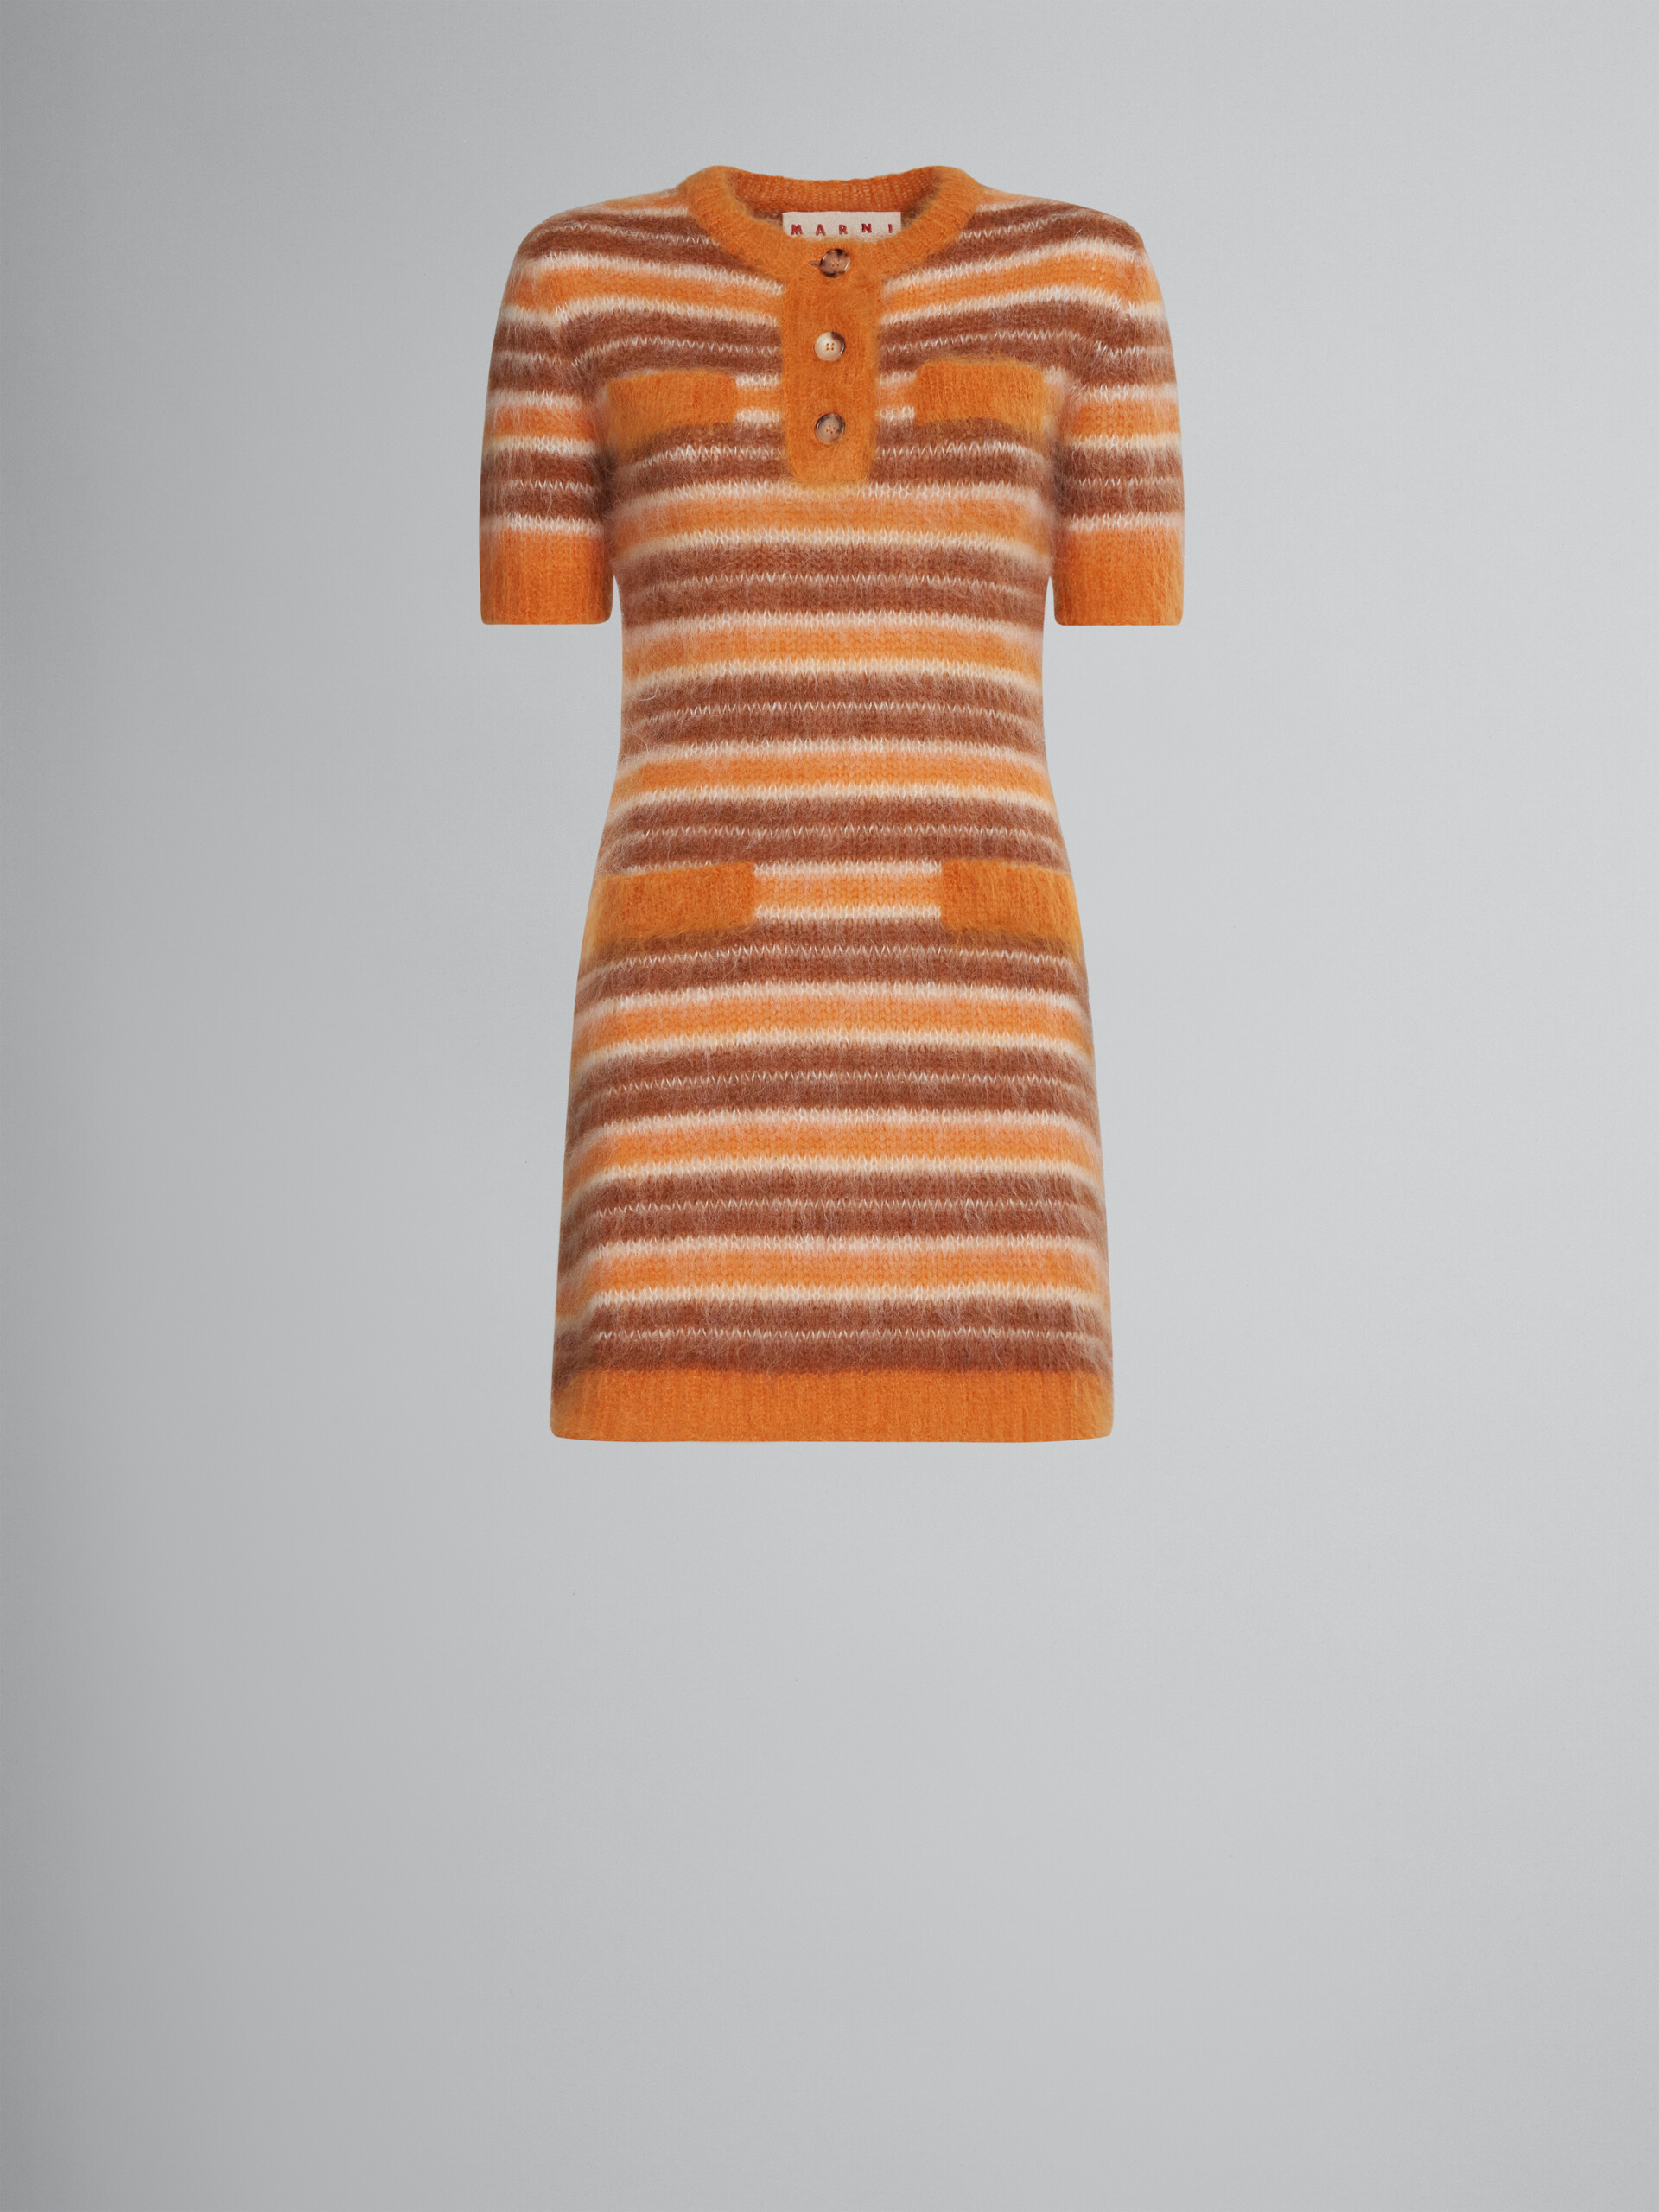 Mohair dress with orange stripes - Dresses - Image 1